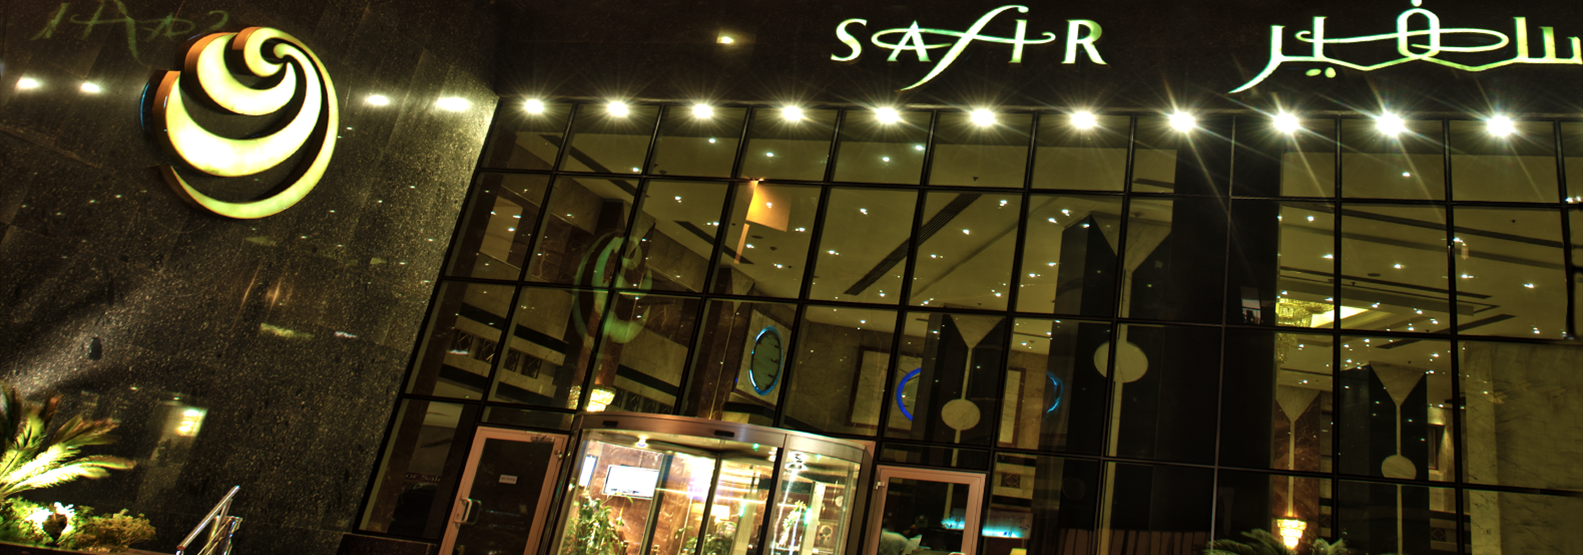 Safir Hotel Cairo Egypt